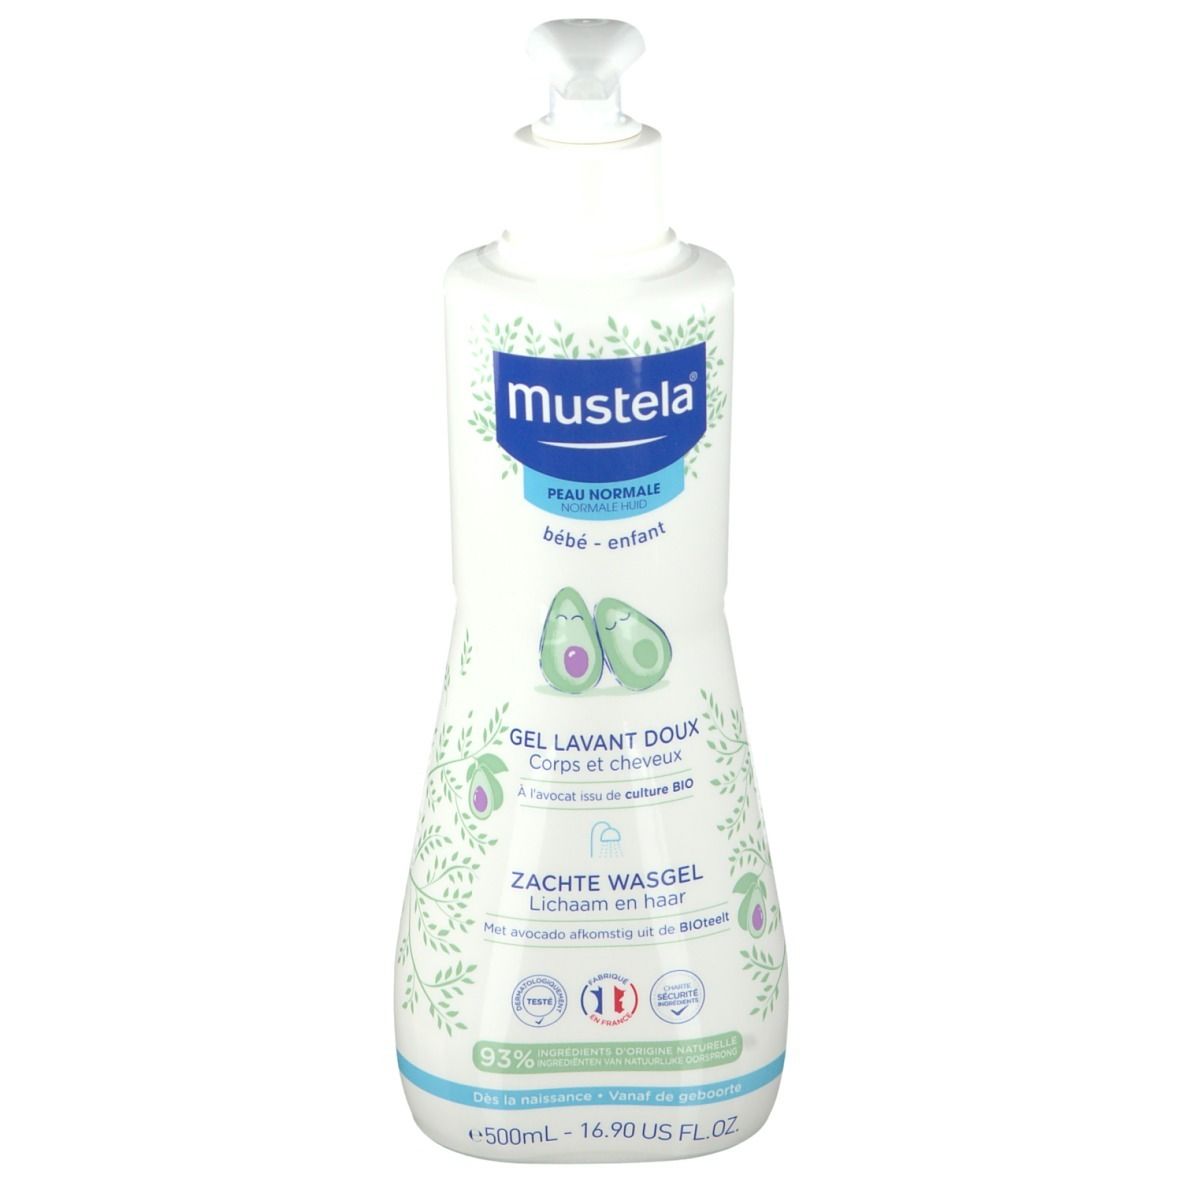 MUSTELA BATH CLEANSER.